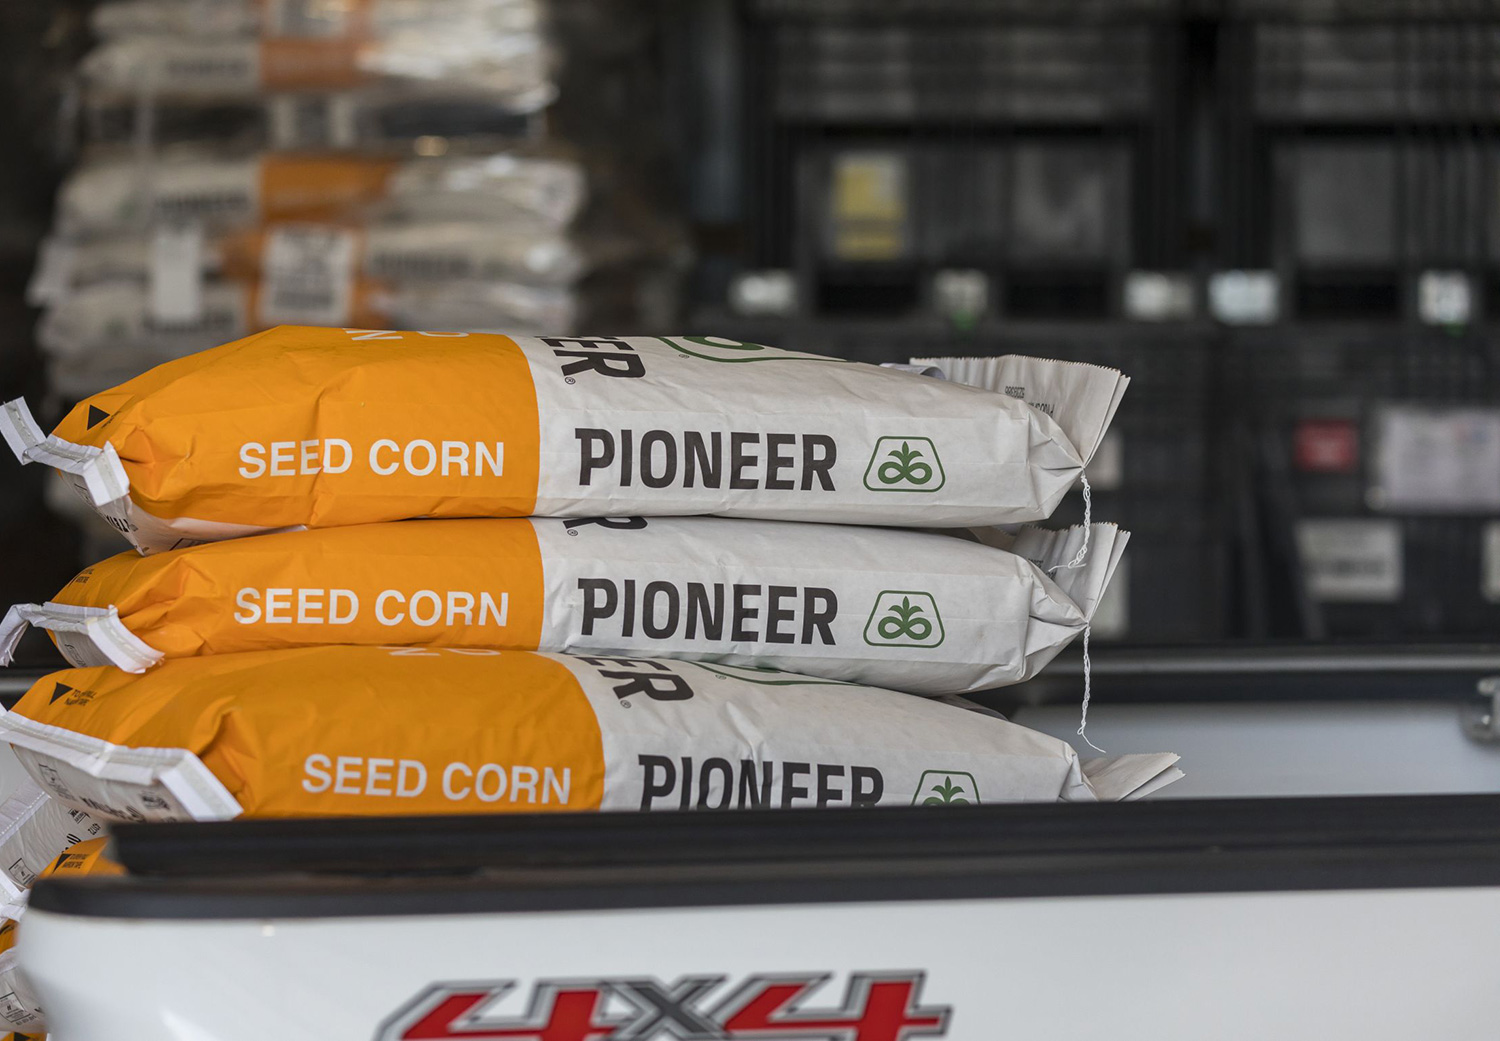 Pioneer seed corn bags - warehouse background